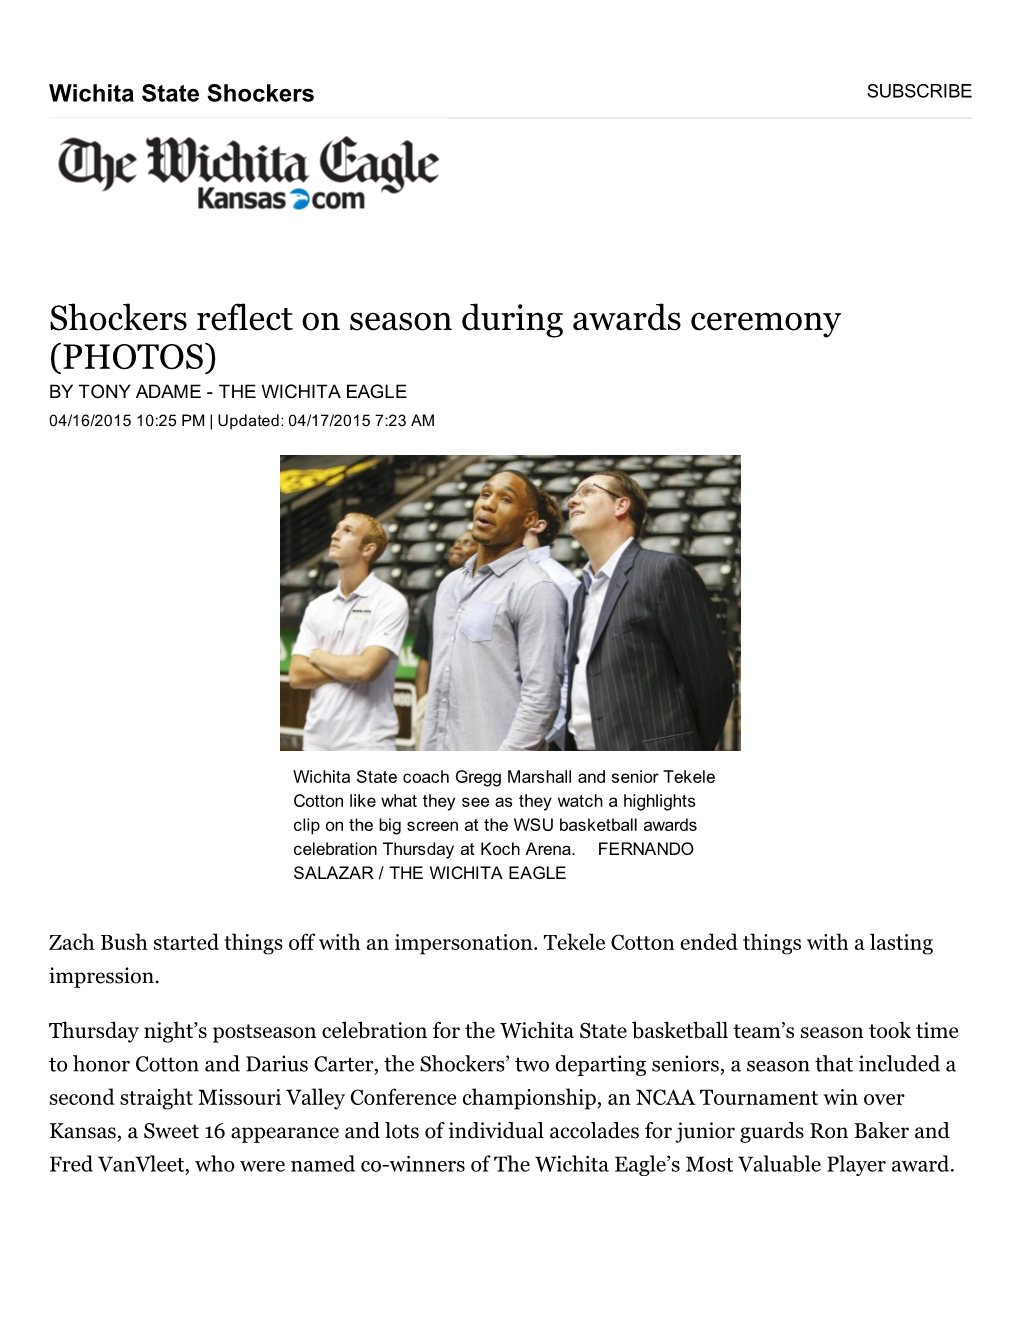 Shockers Reflect on Season During Awards Ceremony (PHOTOS) | the Wichita Eagle the Wichita Eagle